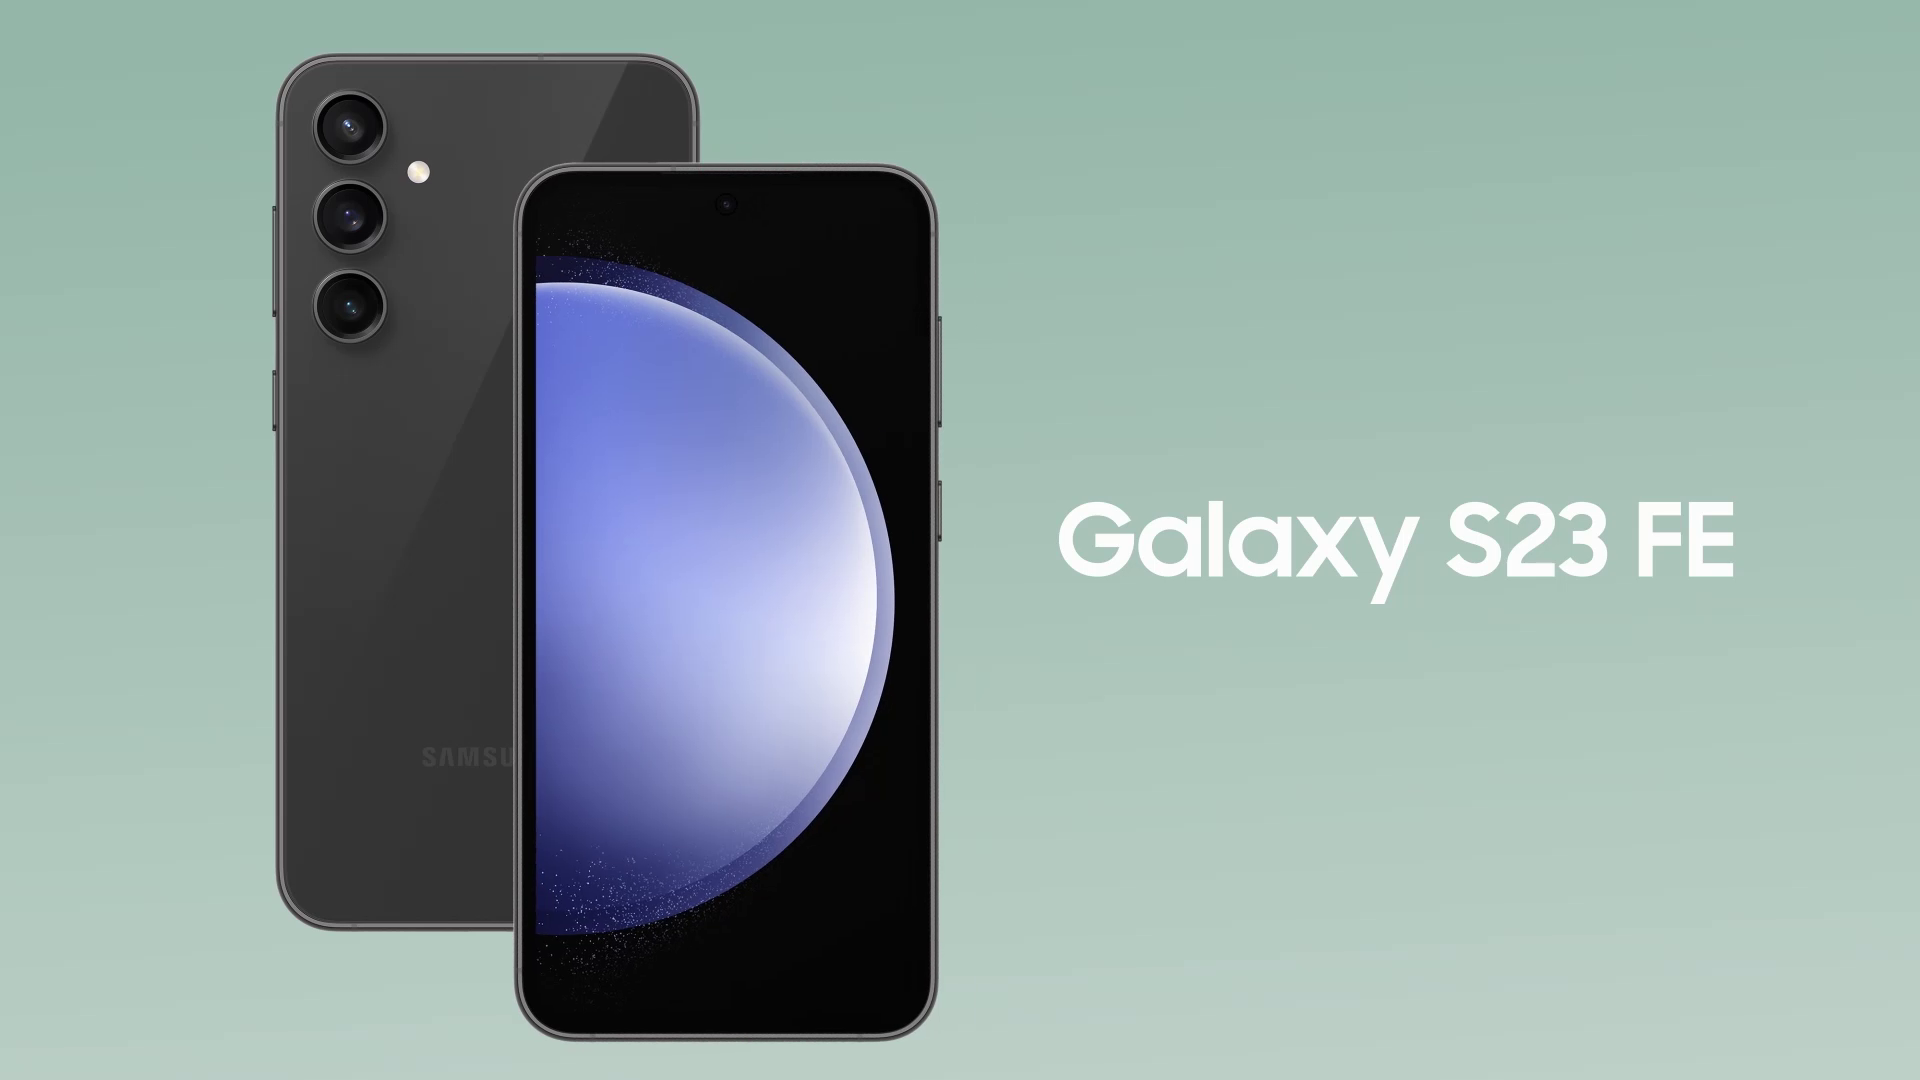 Samsung Galaxy S23 FE with 6.4″ FHD+ 120Hz AMOLED display